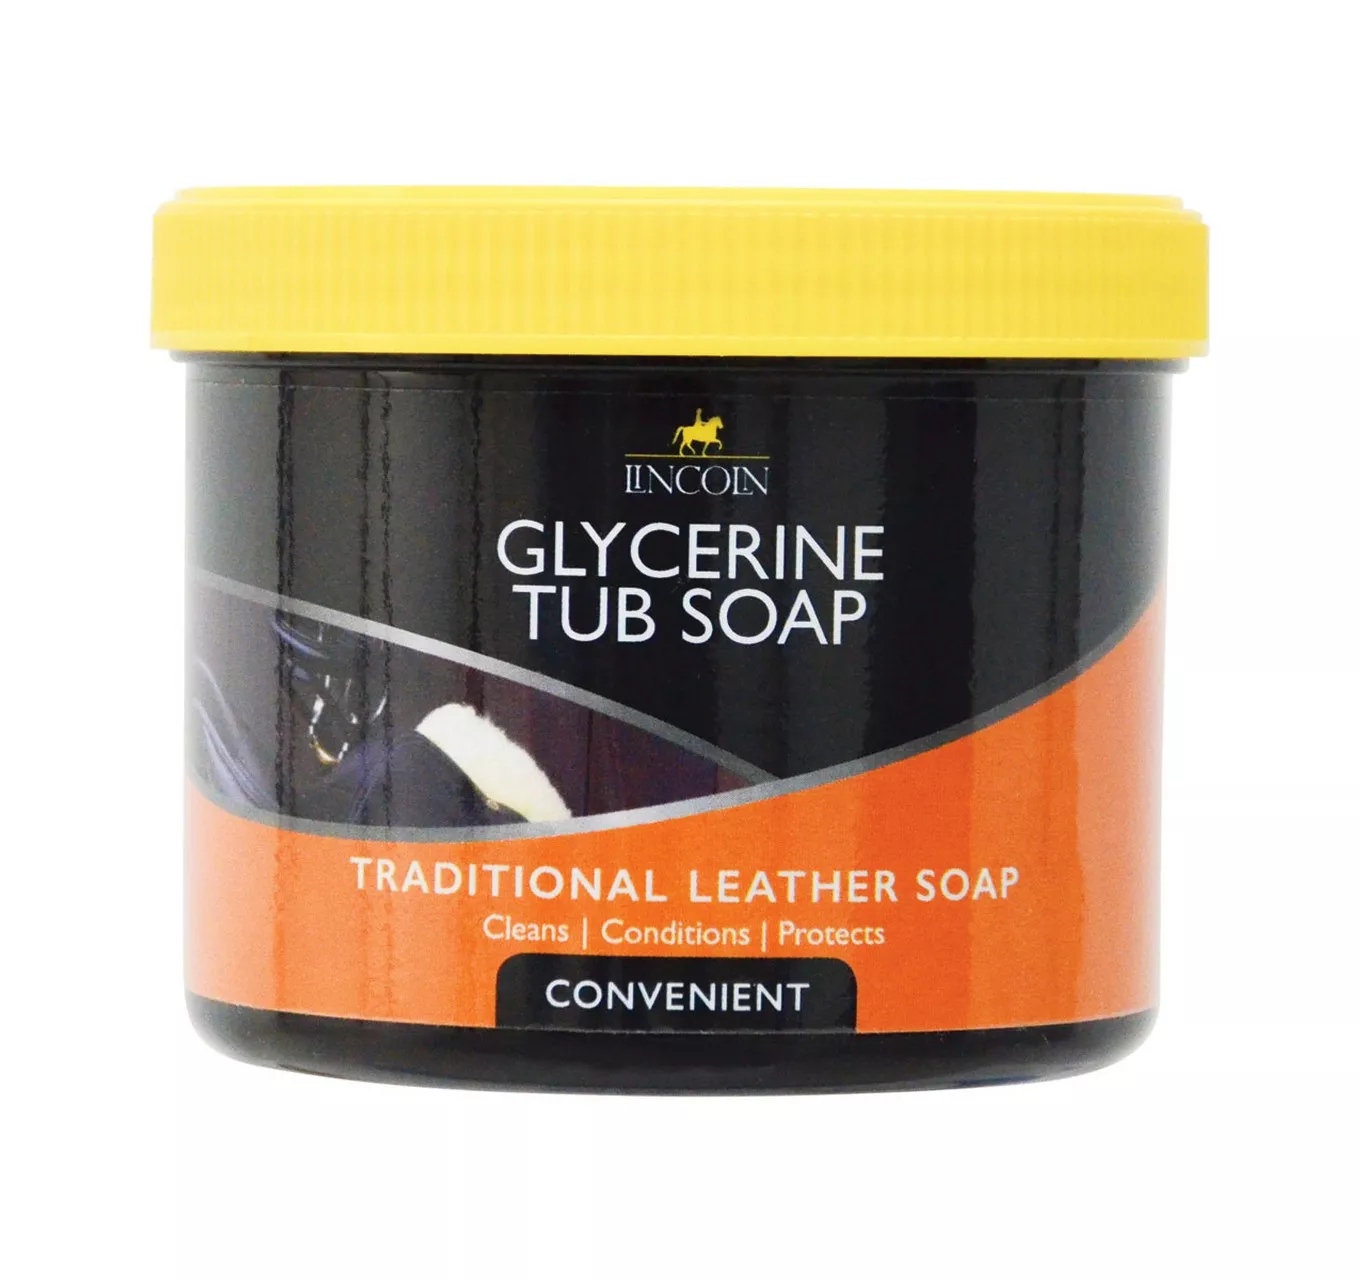 Glycerine Tub Soap 400g